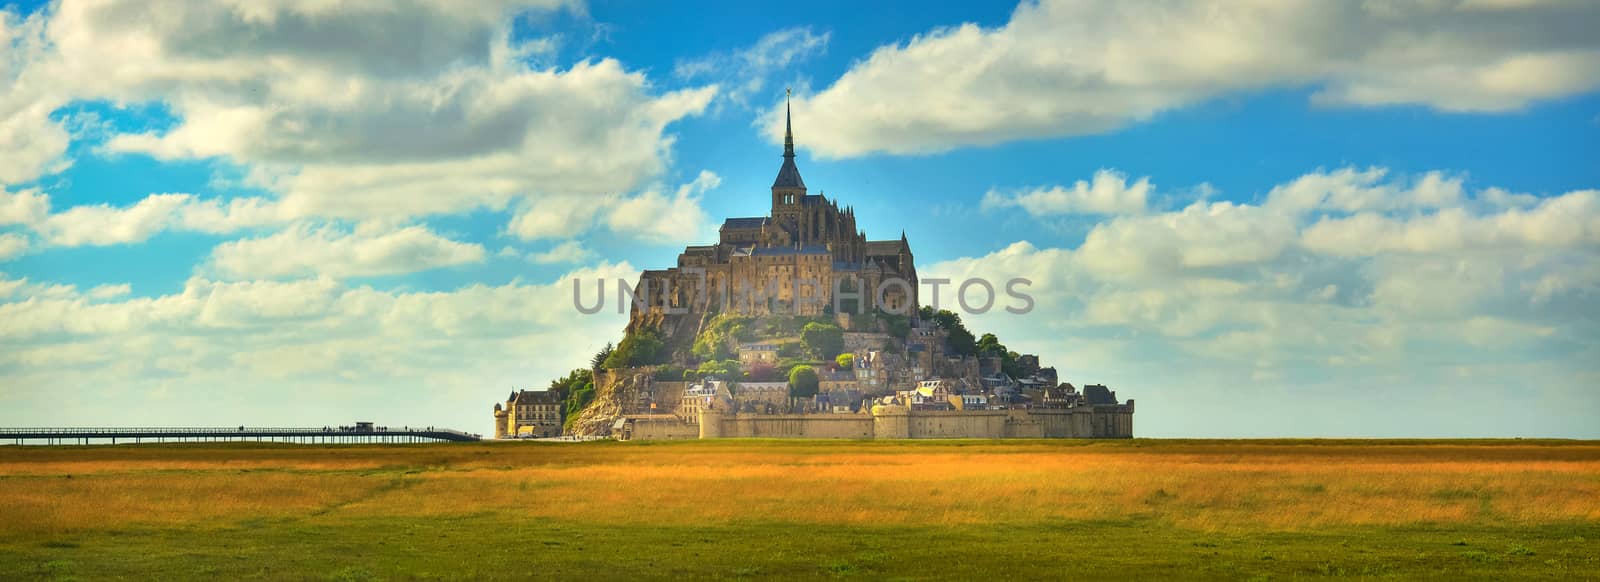 Mont Saint Michel, France by Lazarenko